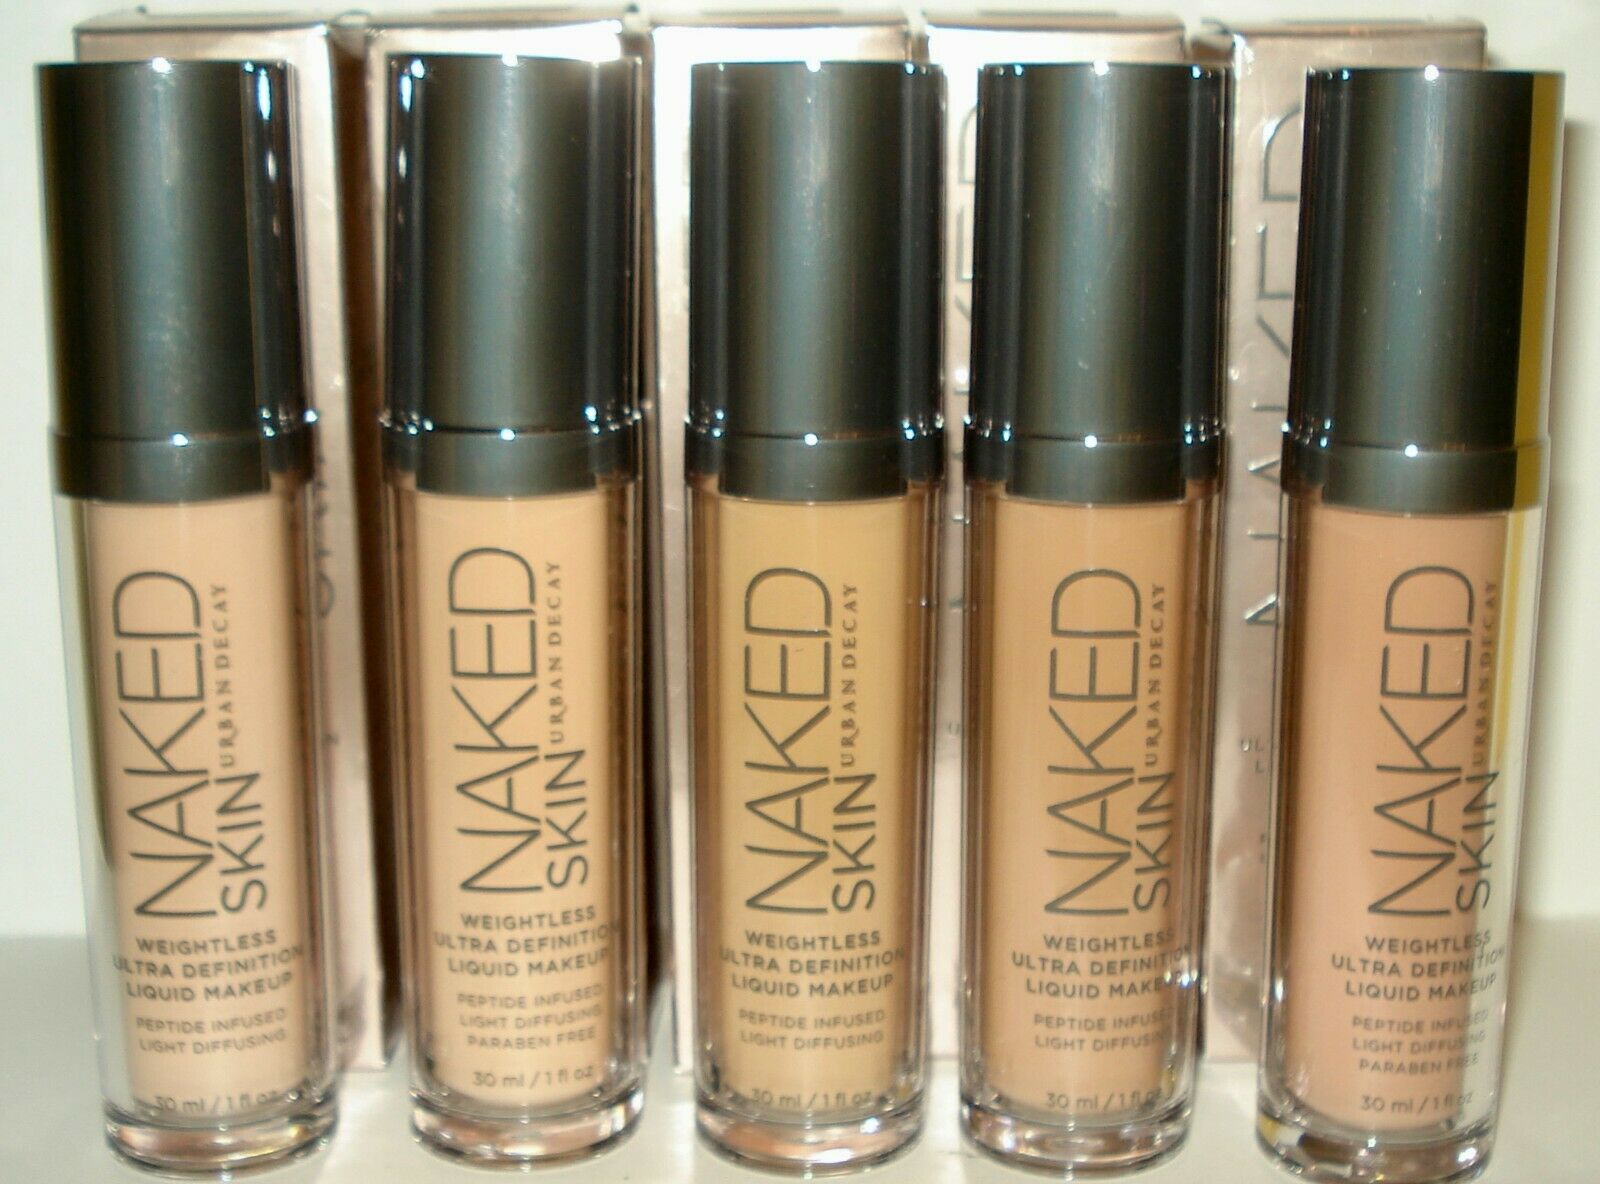 Urban Decay Naked Skin Weightless Ultra Definition Liquid Makeup Choose Shade